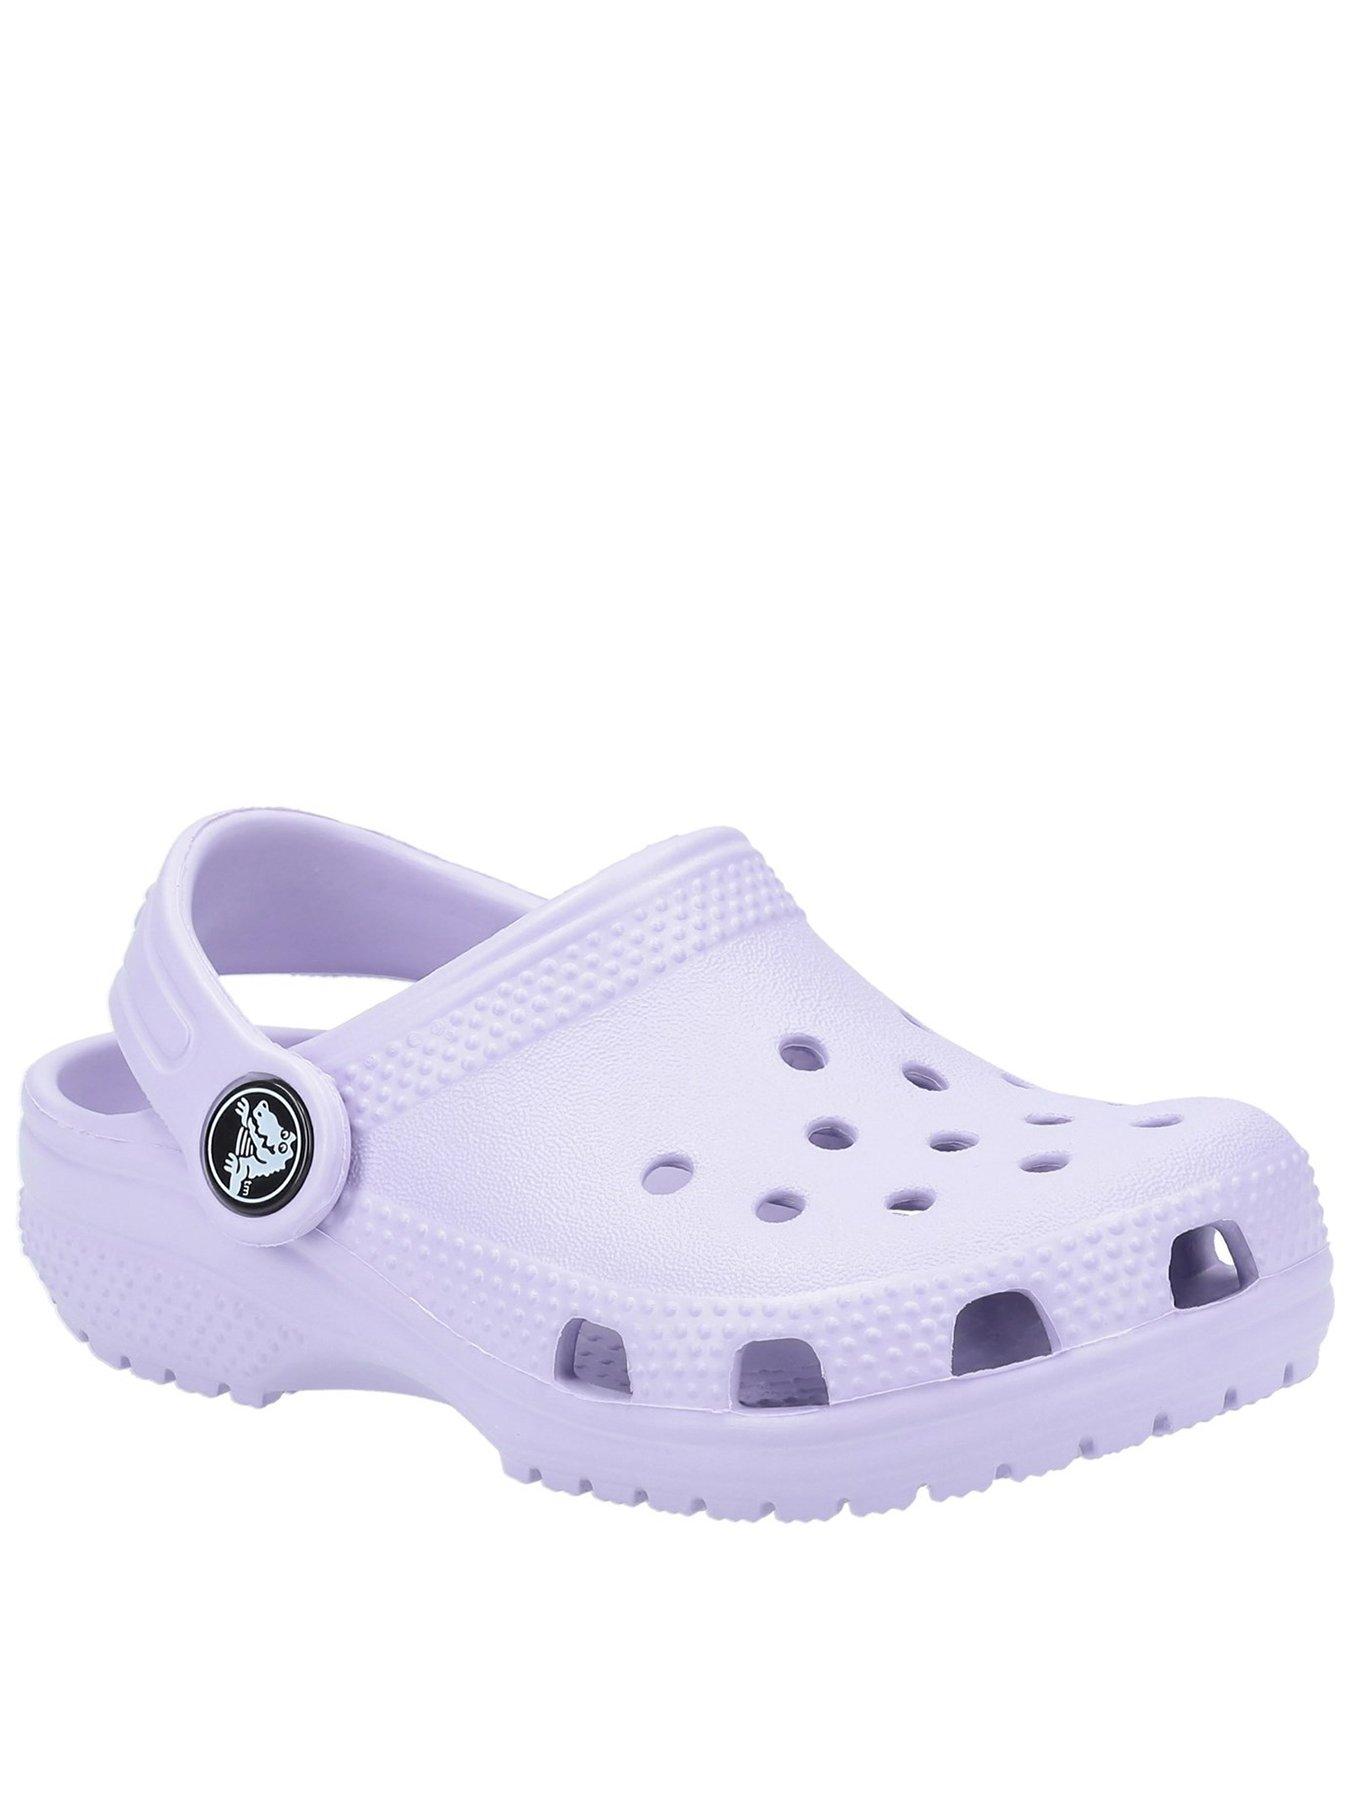 girls size 4 crocs